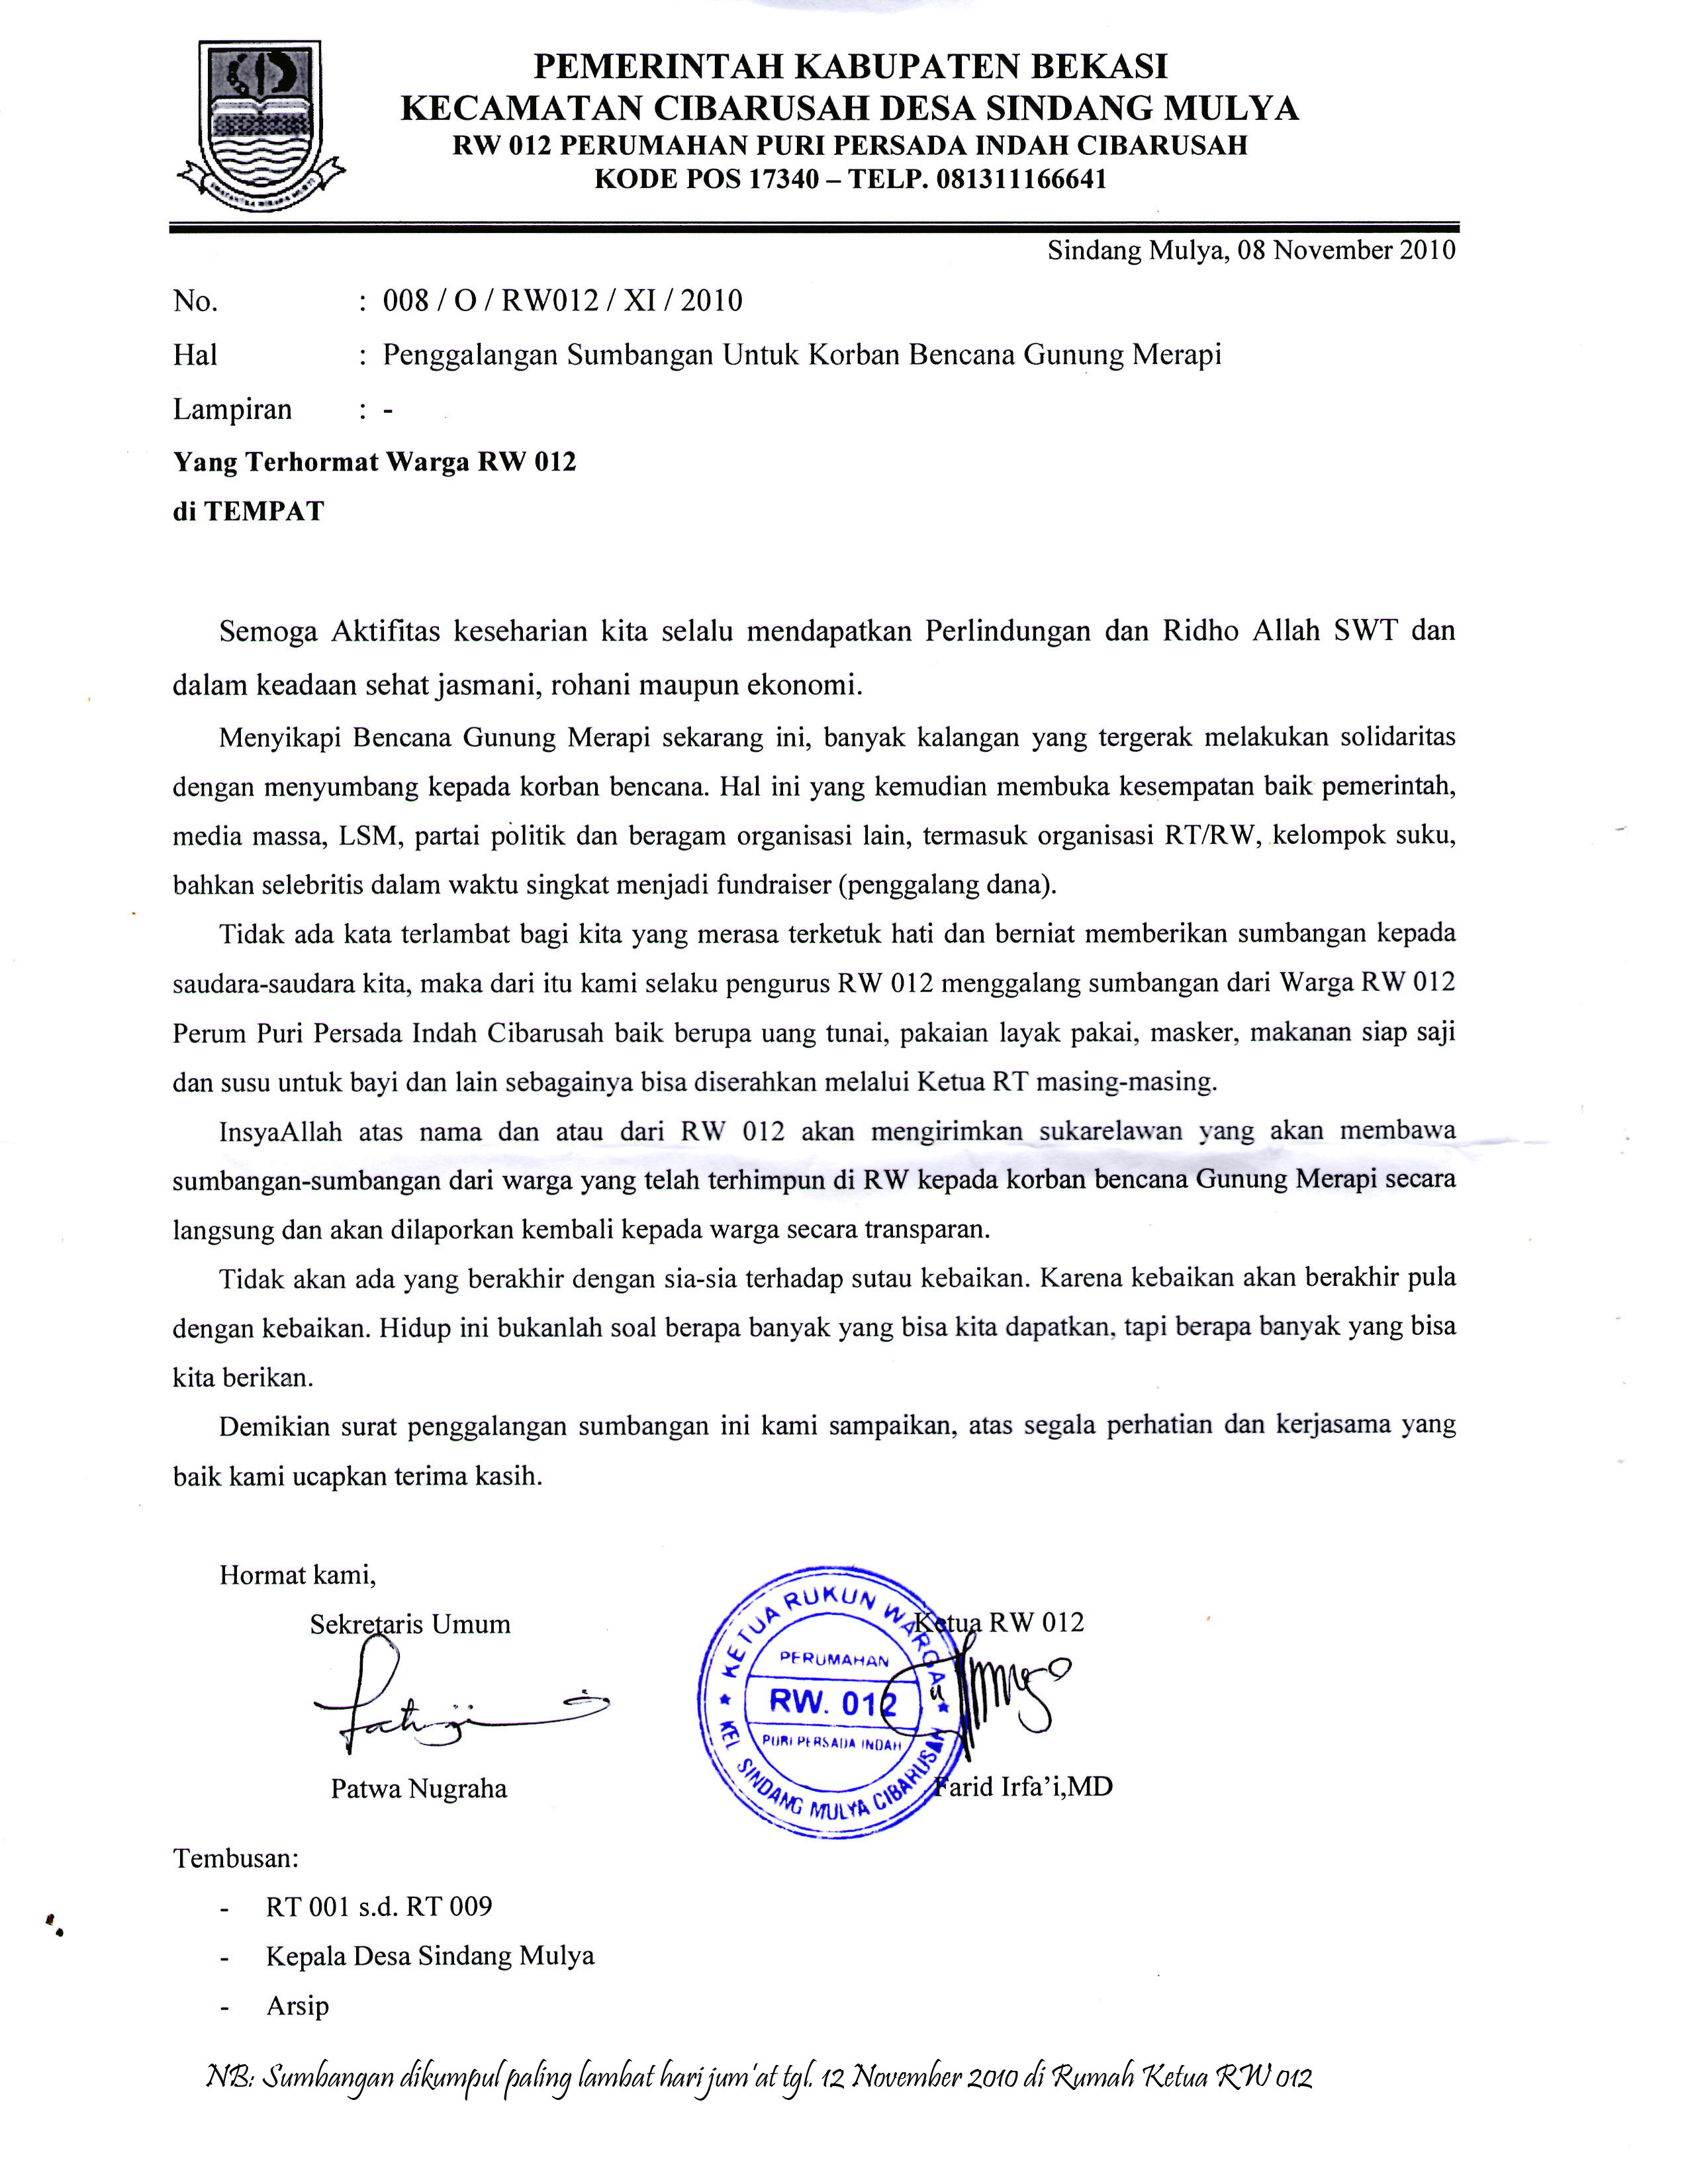 Surat Menyurat Forum Silaturahmi Warga Puri Persada Indah